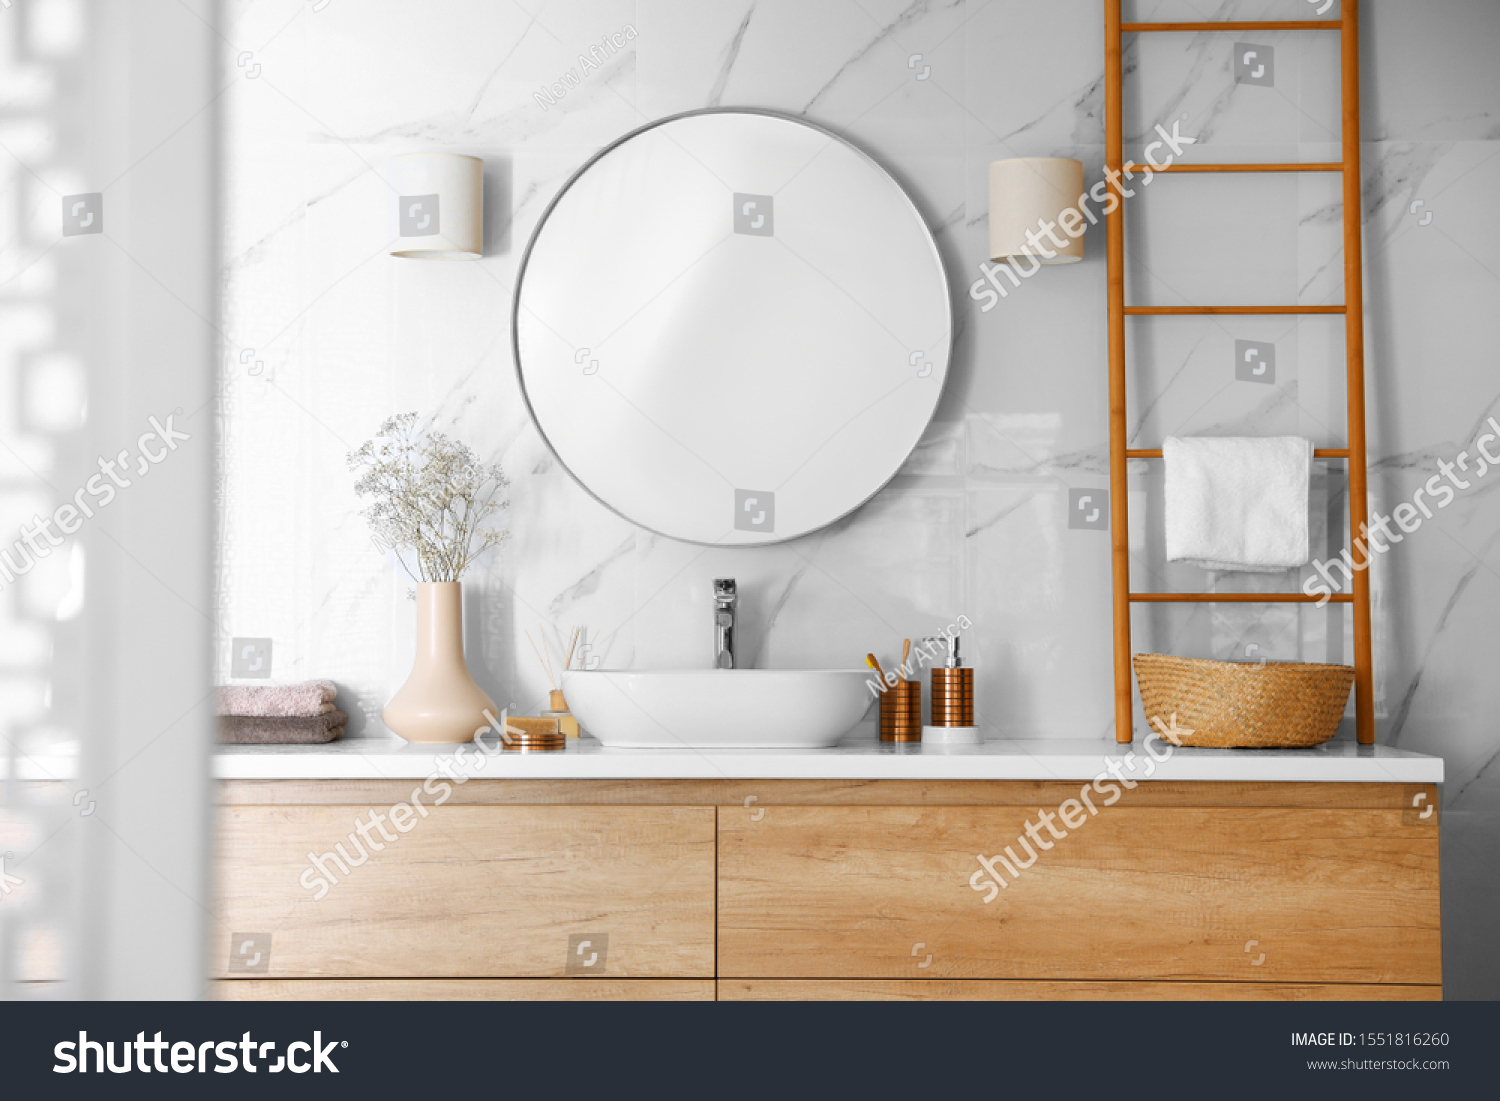 Modern bathroom interior with stylish mirror and vessel sink #1551816260